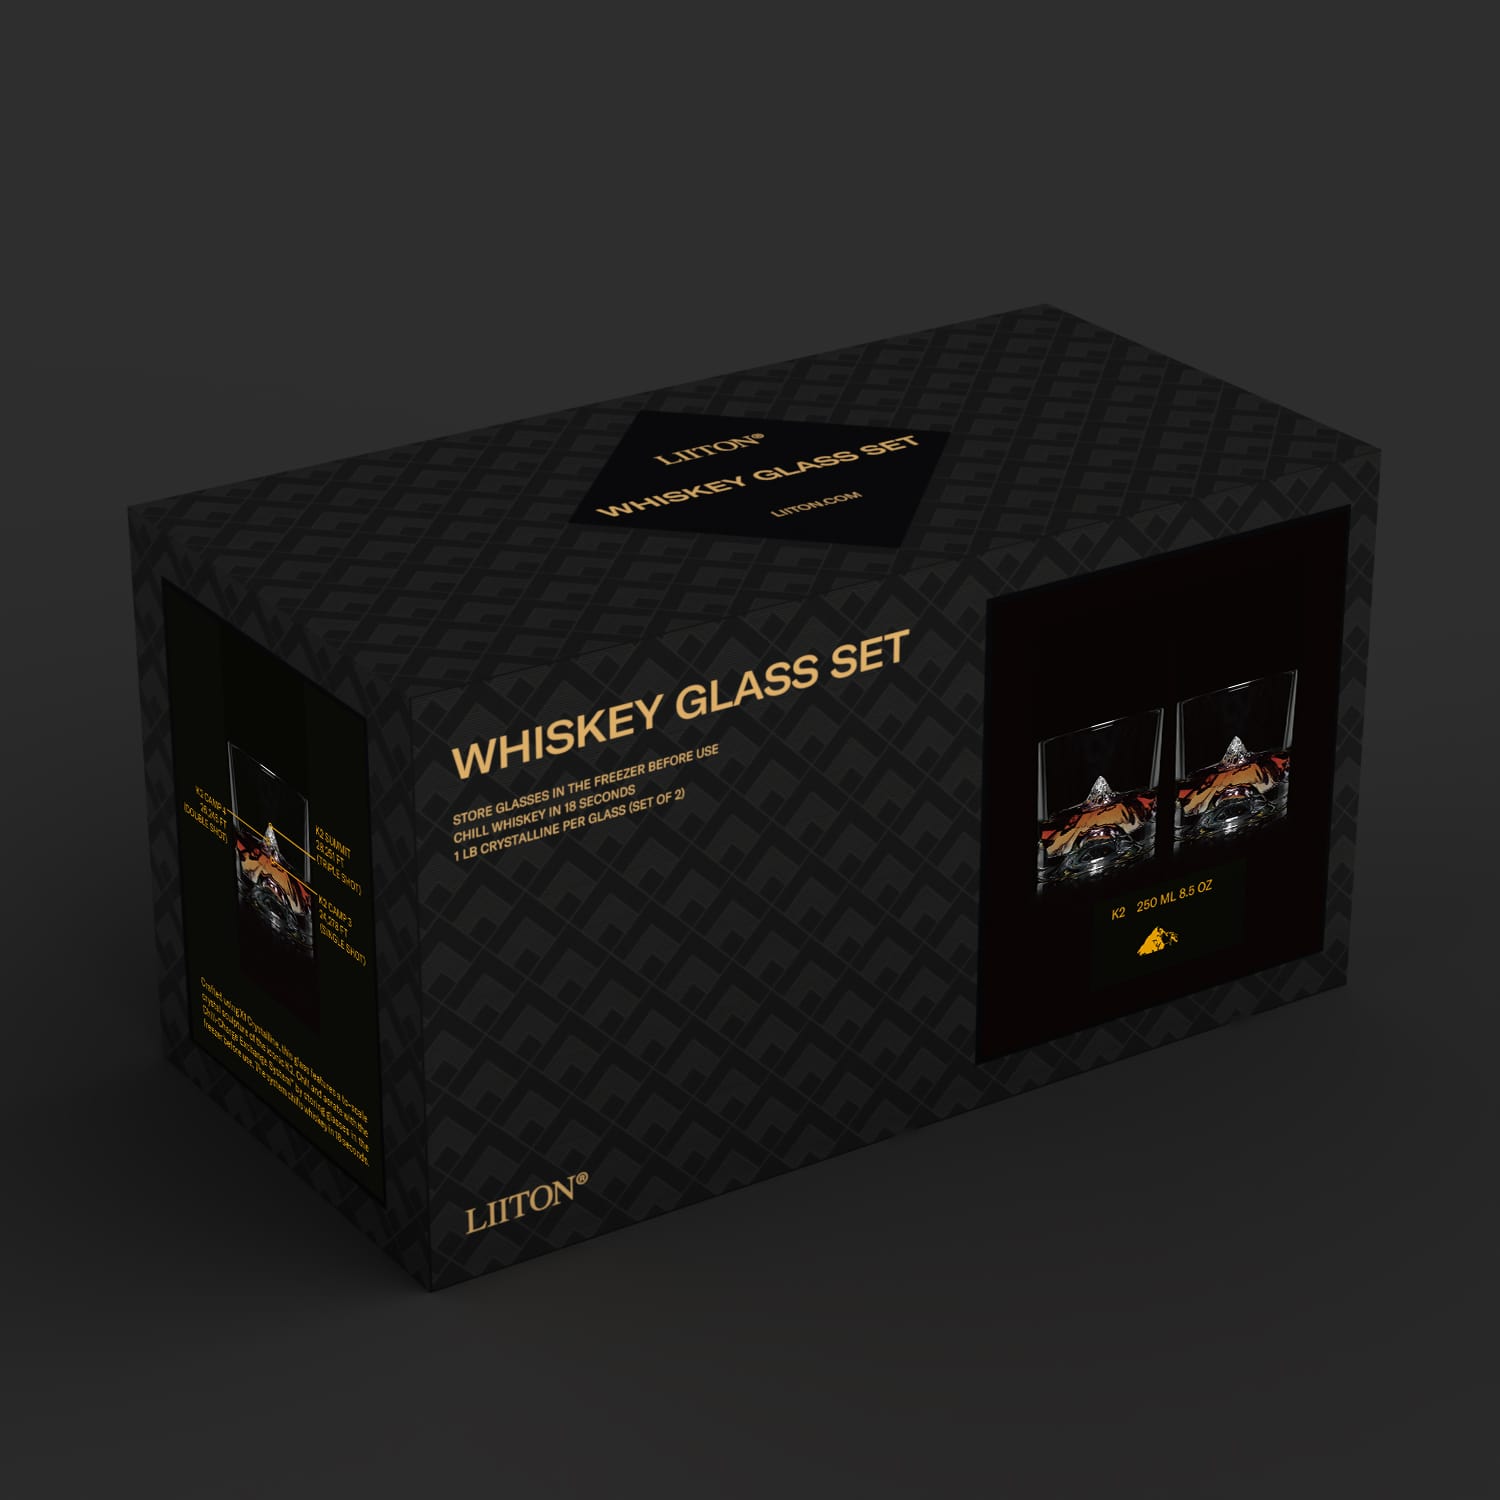 Whiskygläser Liiton "K2" - 2er-Set